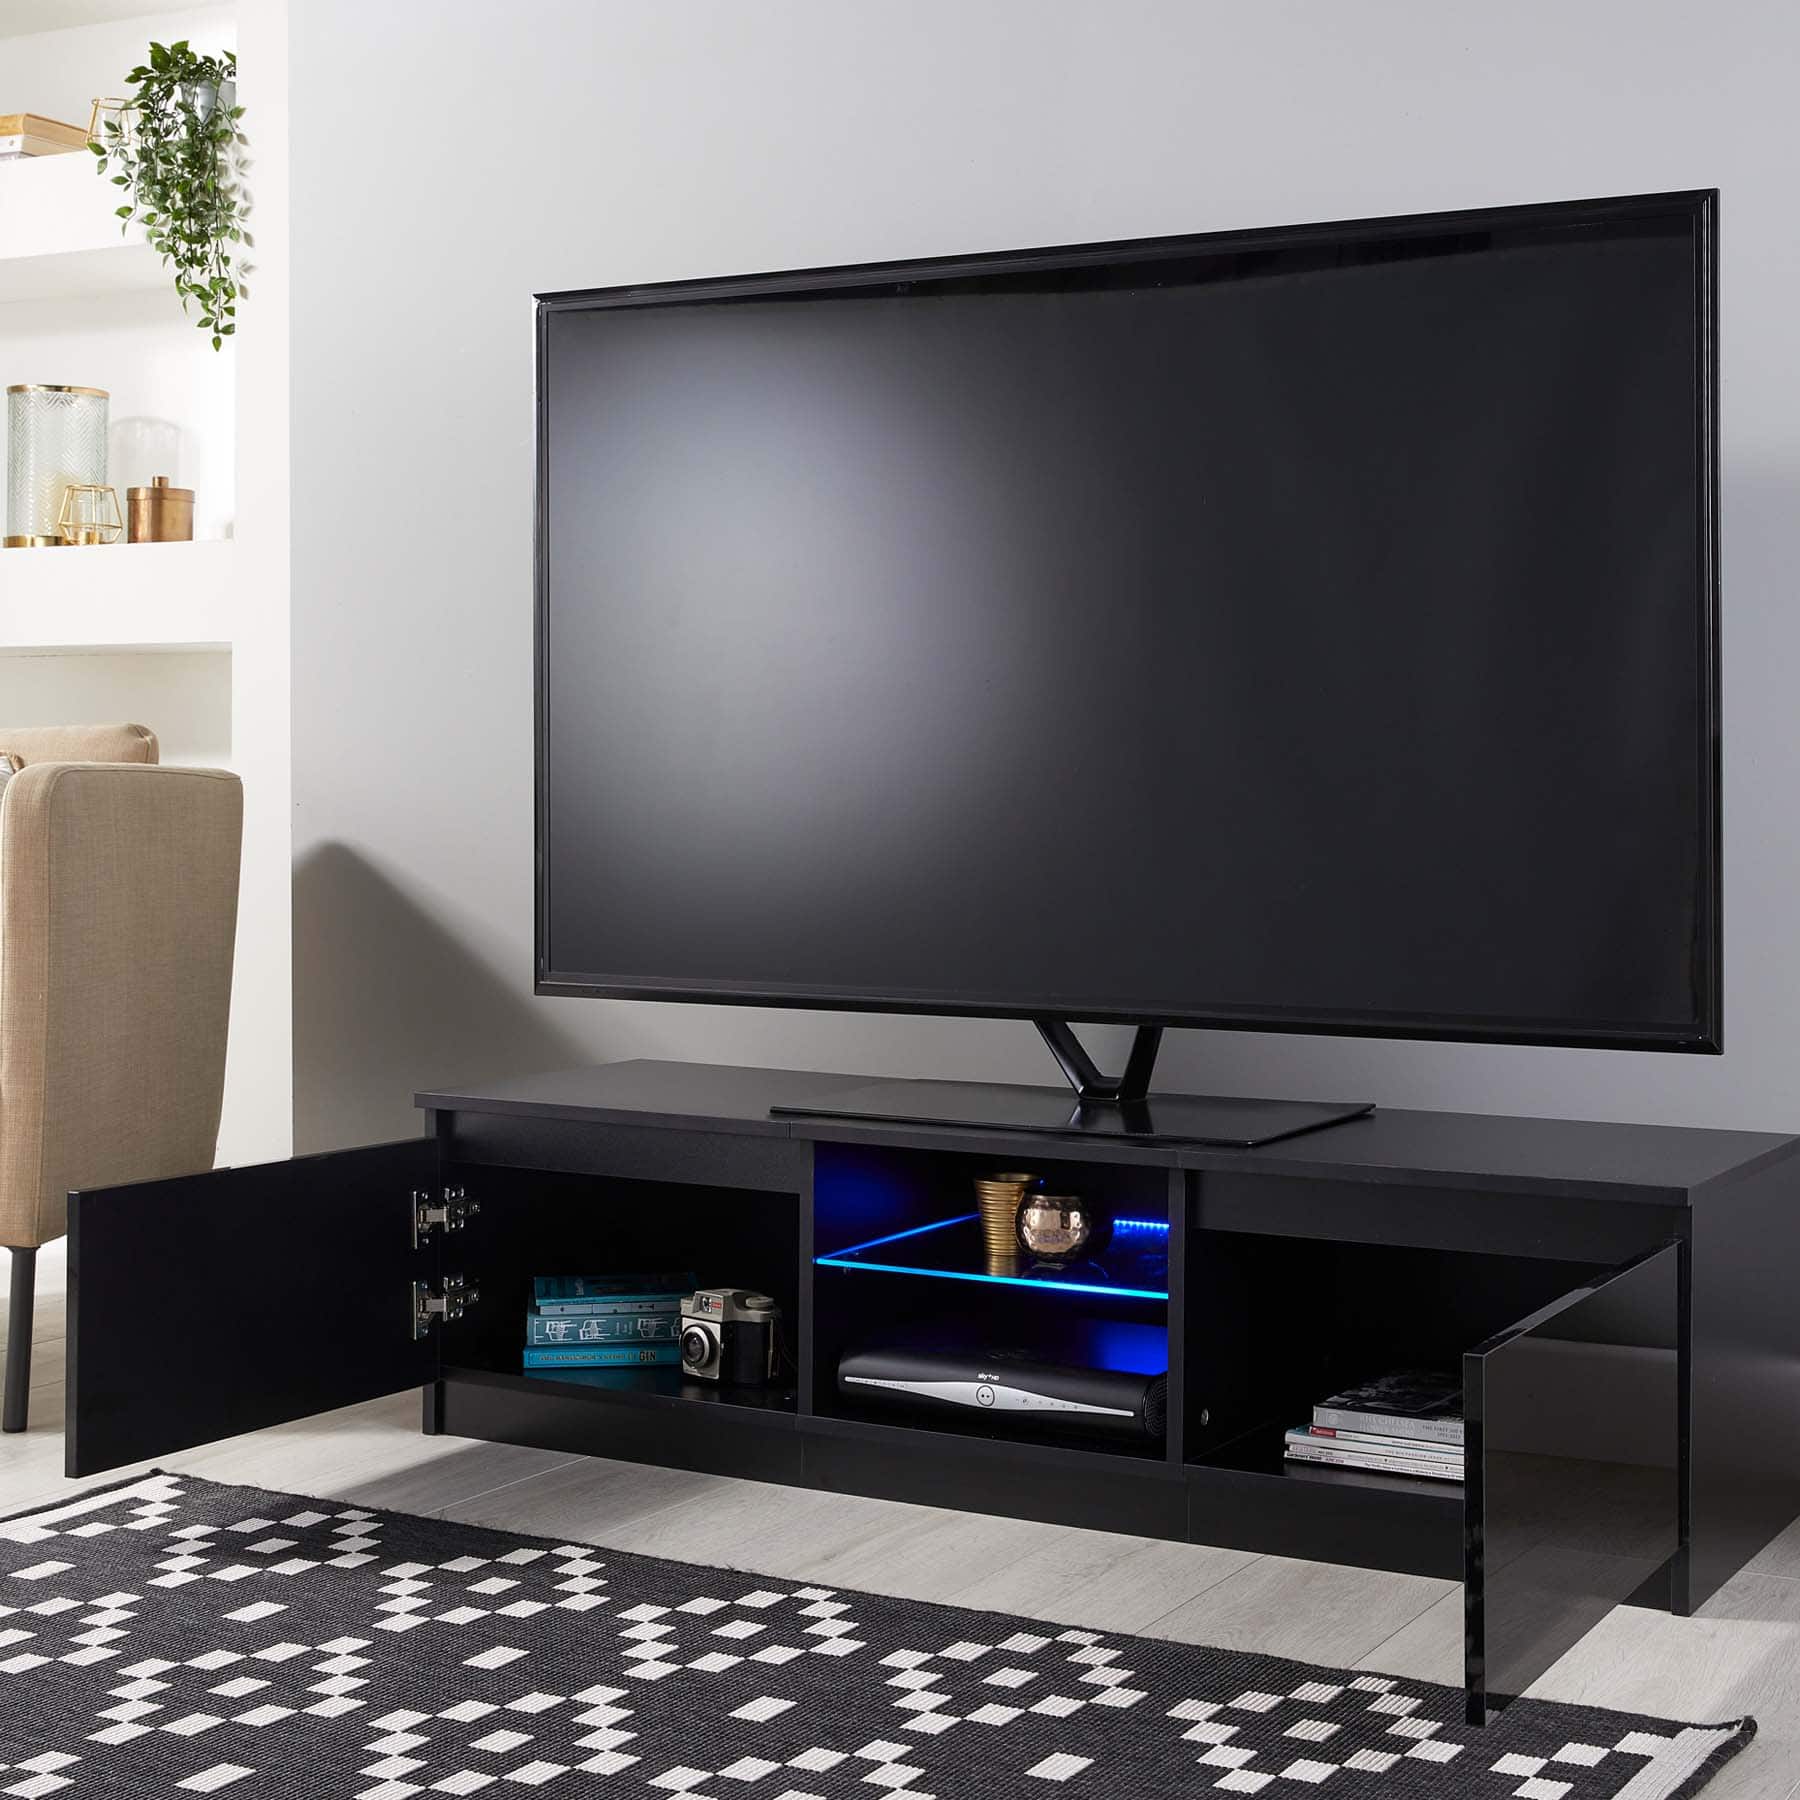 Details about   MMT RTV 1400 Black TV Stand Cabinet Unit With LED Lights for 42 49 55 65 inch 4k 